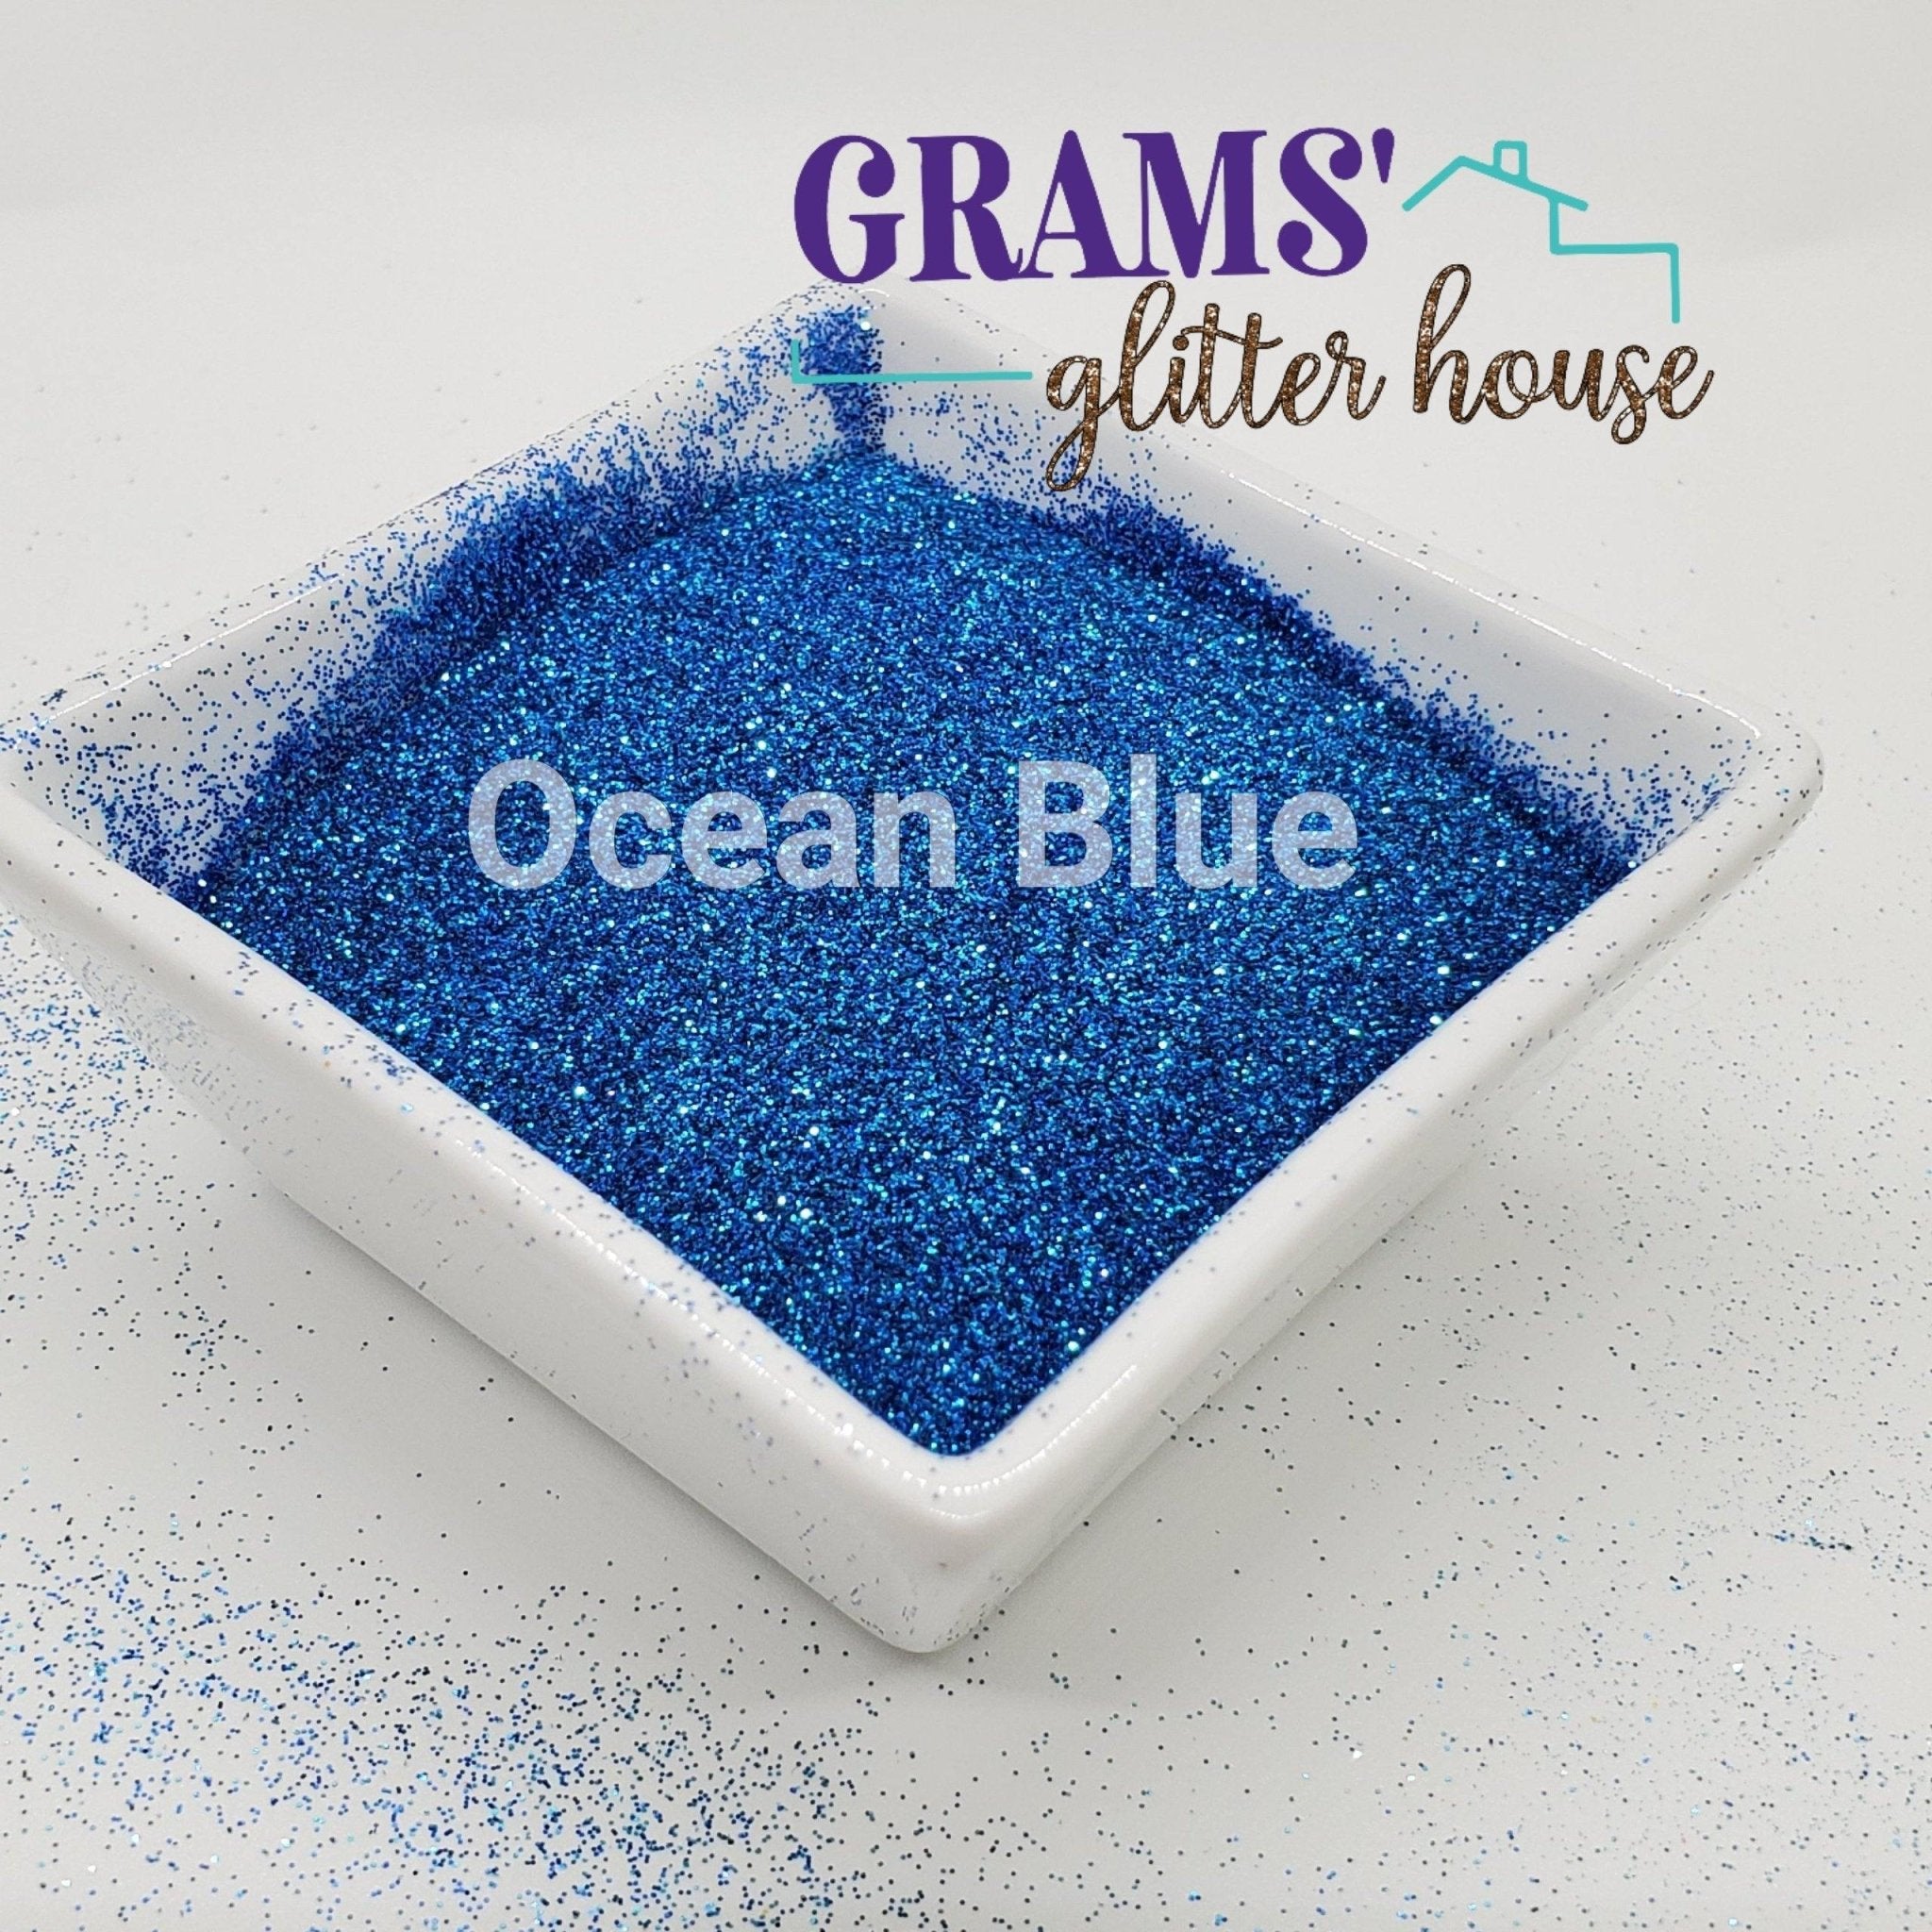 Grams' Glitter House Ocean Blue | Metallic | Exclusive to GGH Polyester Glitter